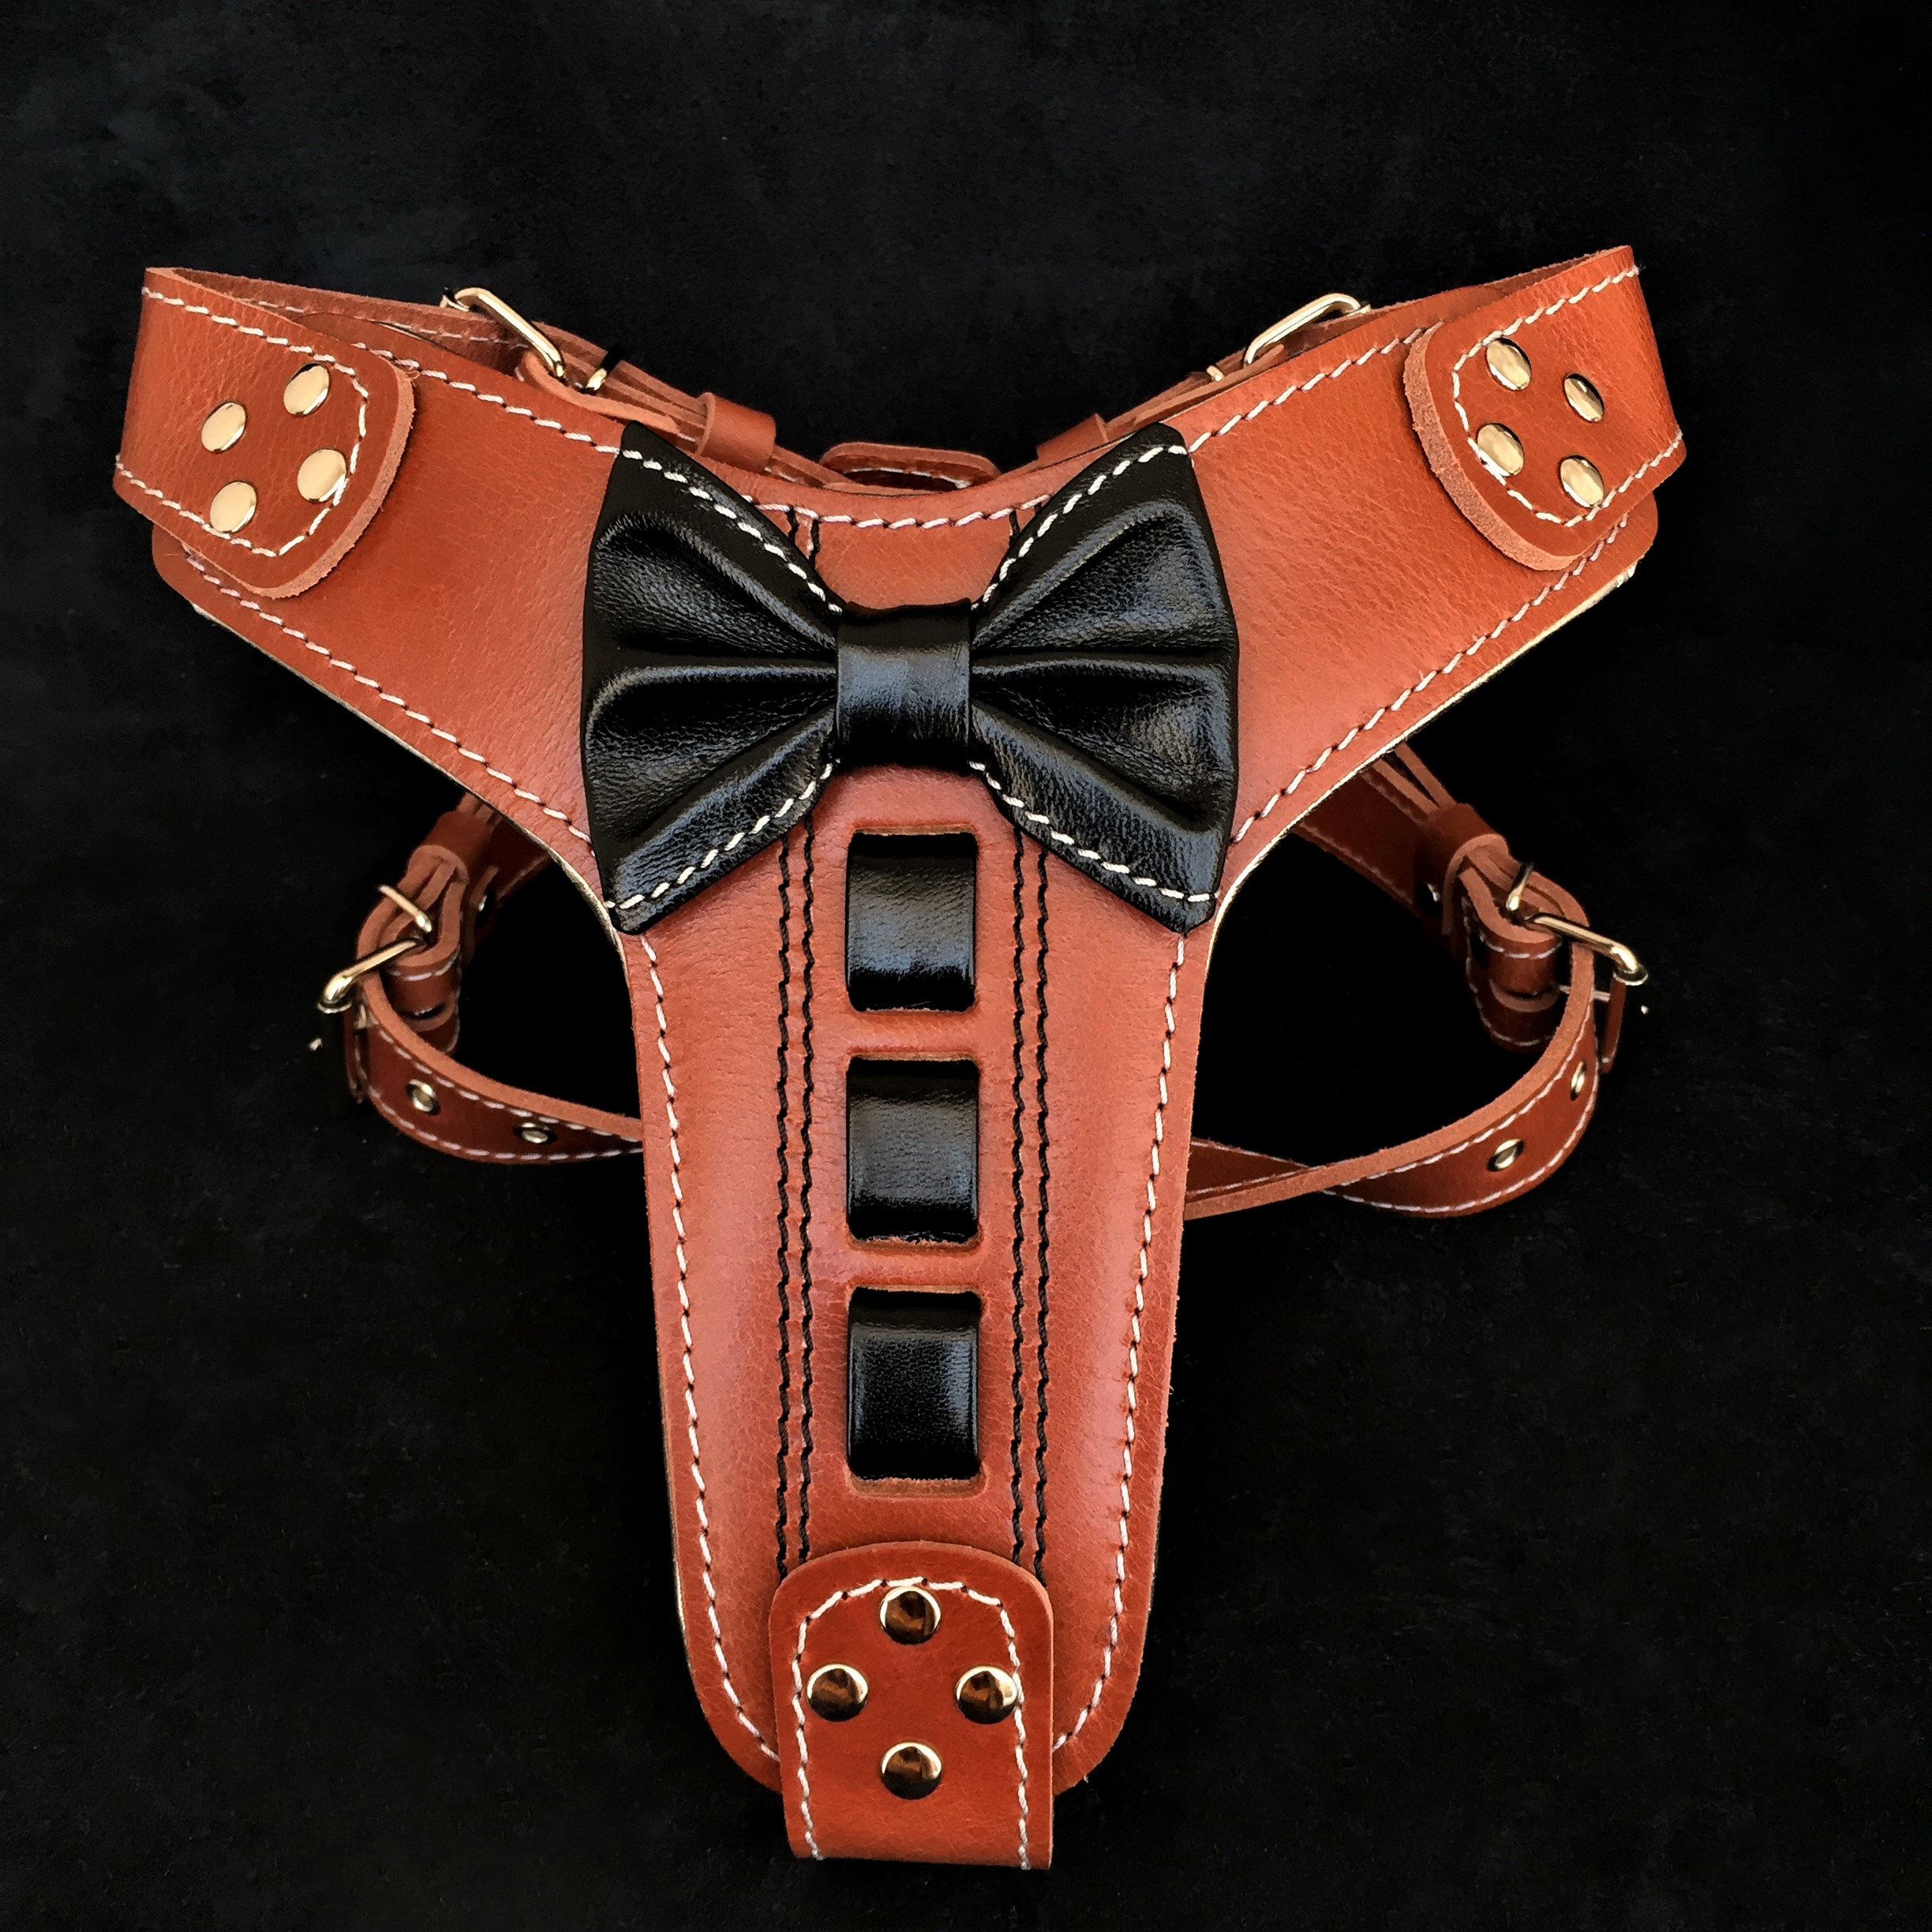 Genuine Leather Dog Harness, Medium. 25.5 inch-29 inch Chest size, 1 inch Wide, Amstaff, Pitbull, Orange